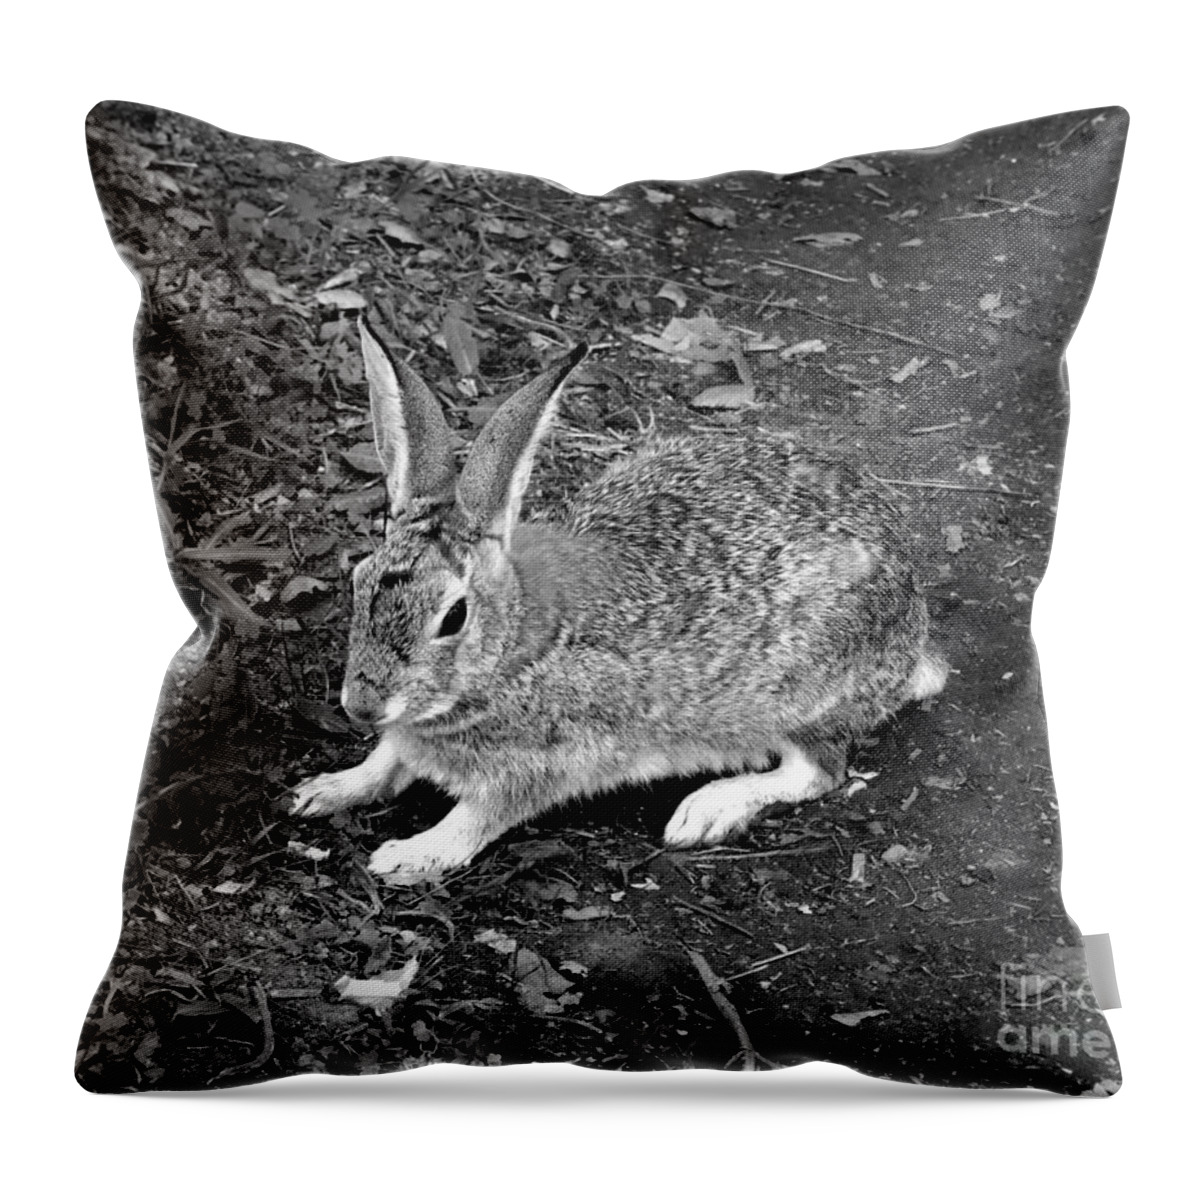 Artoffoxvox Throw Pillow featuring the photograph Wild Rabbit Photograph by Kristen Fox